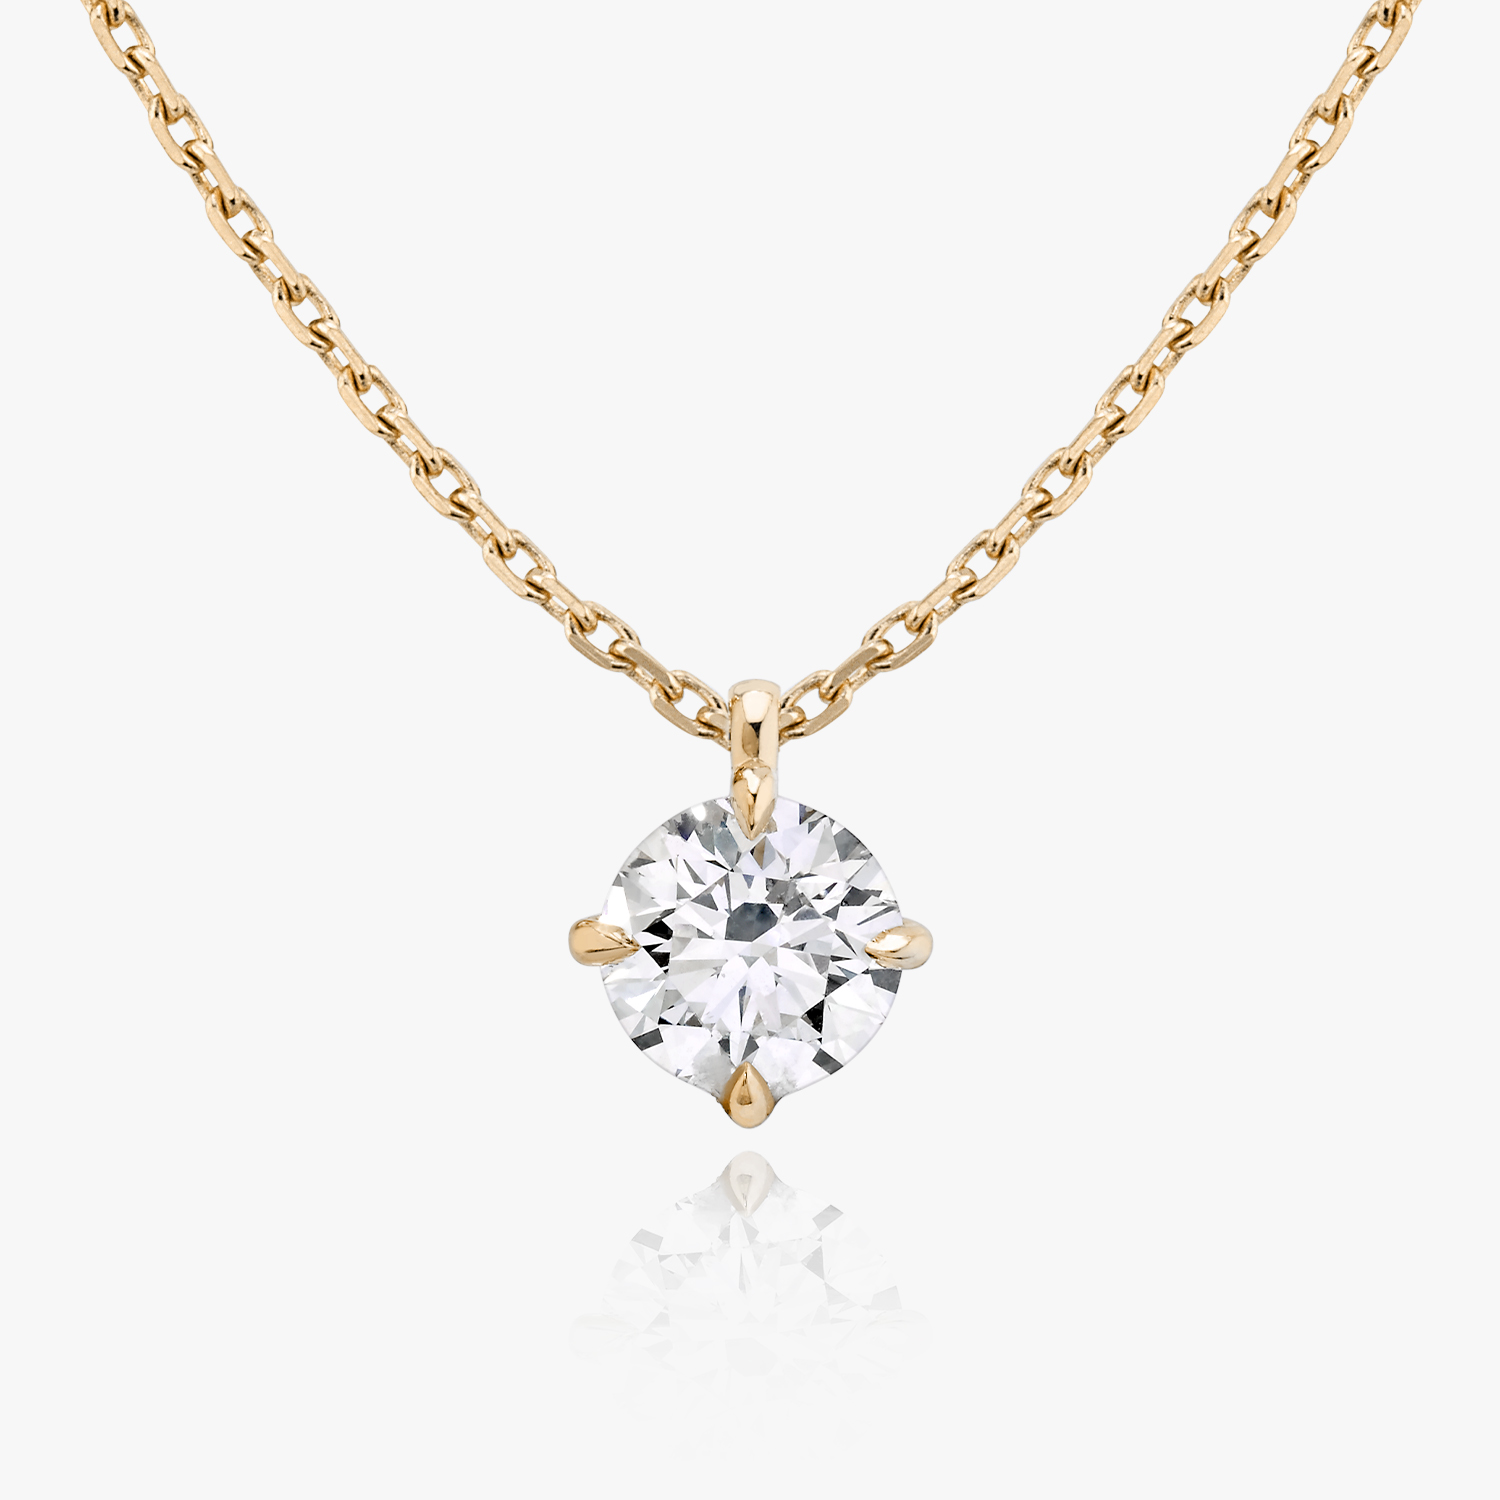 Simulated Diamond Women's V Shape Charm Pendant Necklace 14k